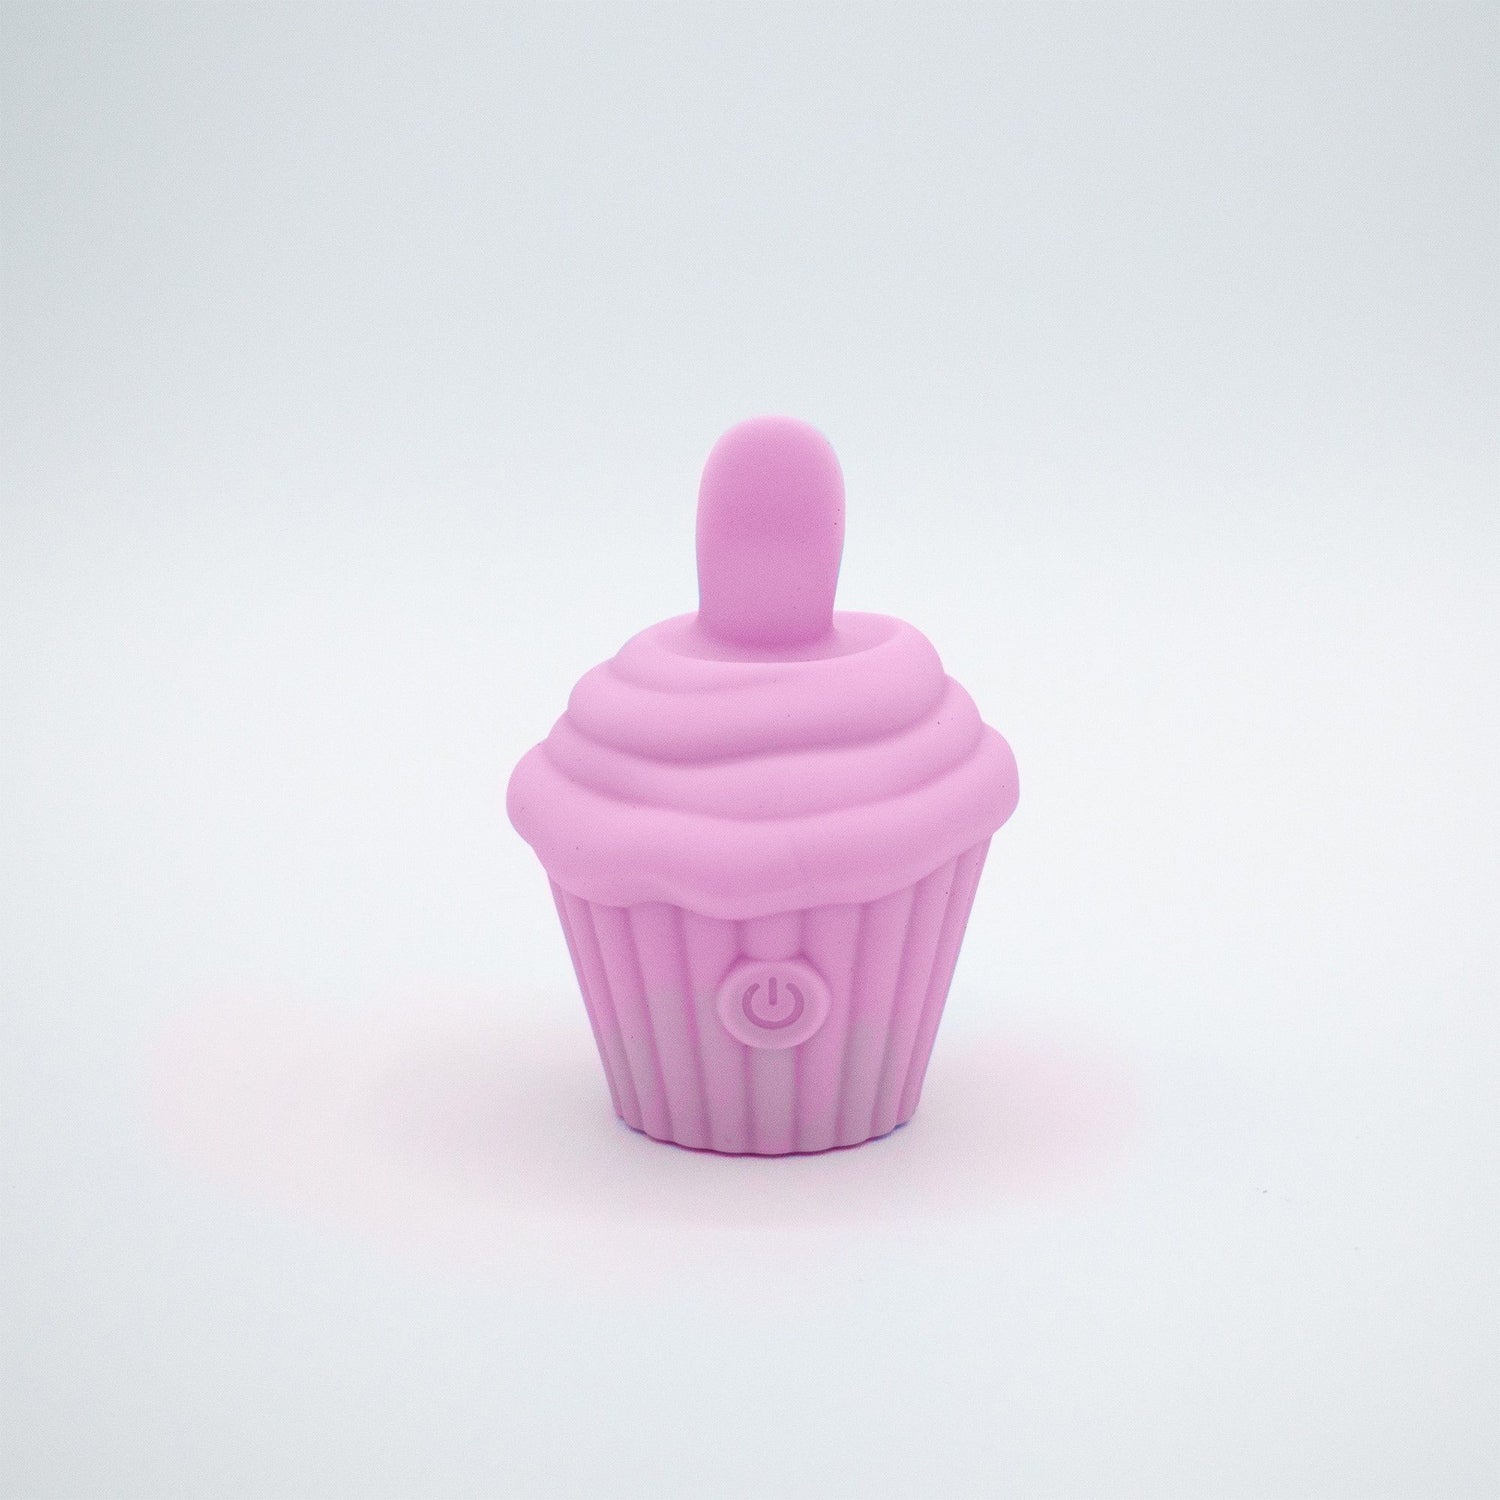 Cake Eater Clit Flicker Stimulator -Pink